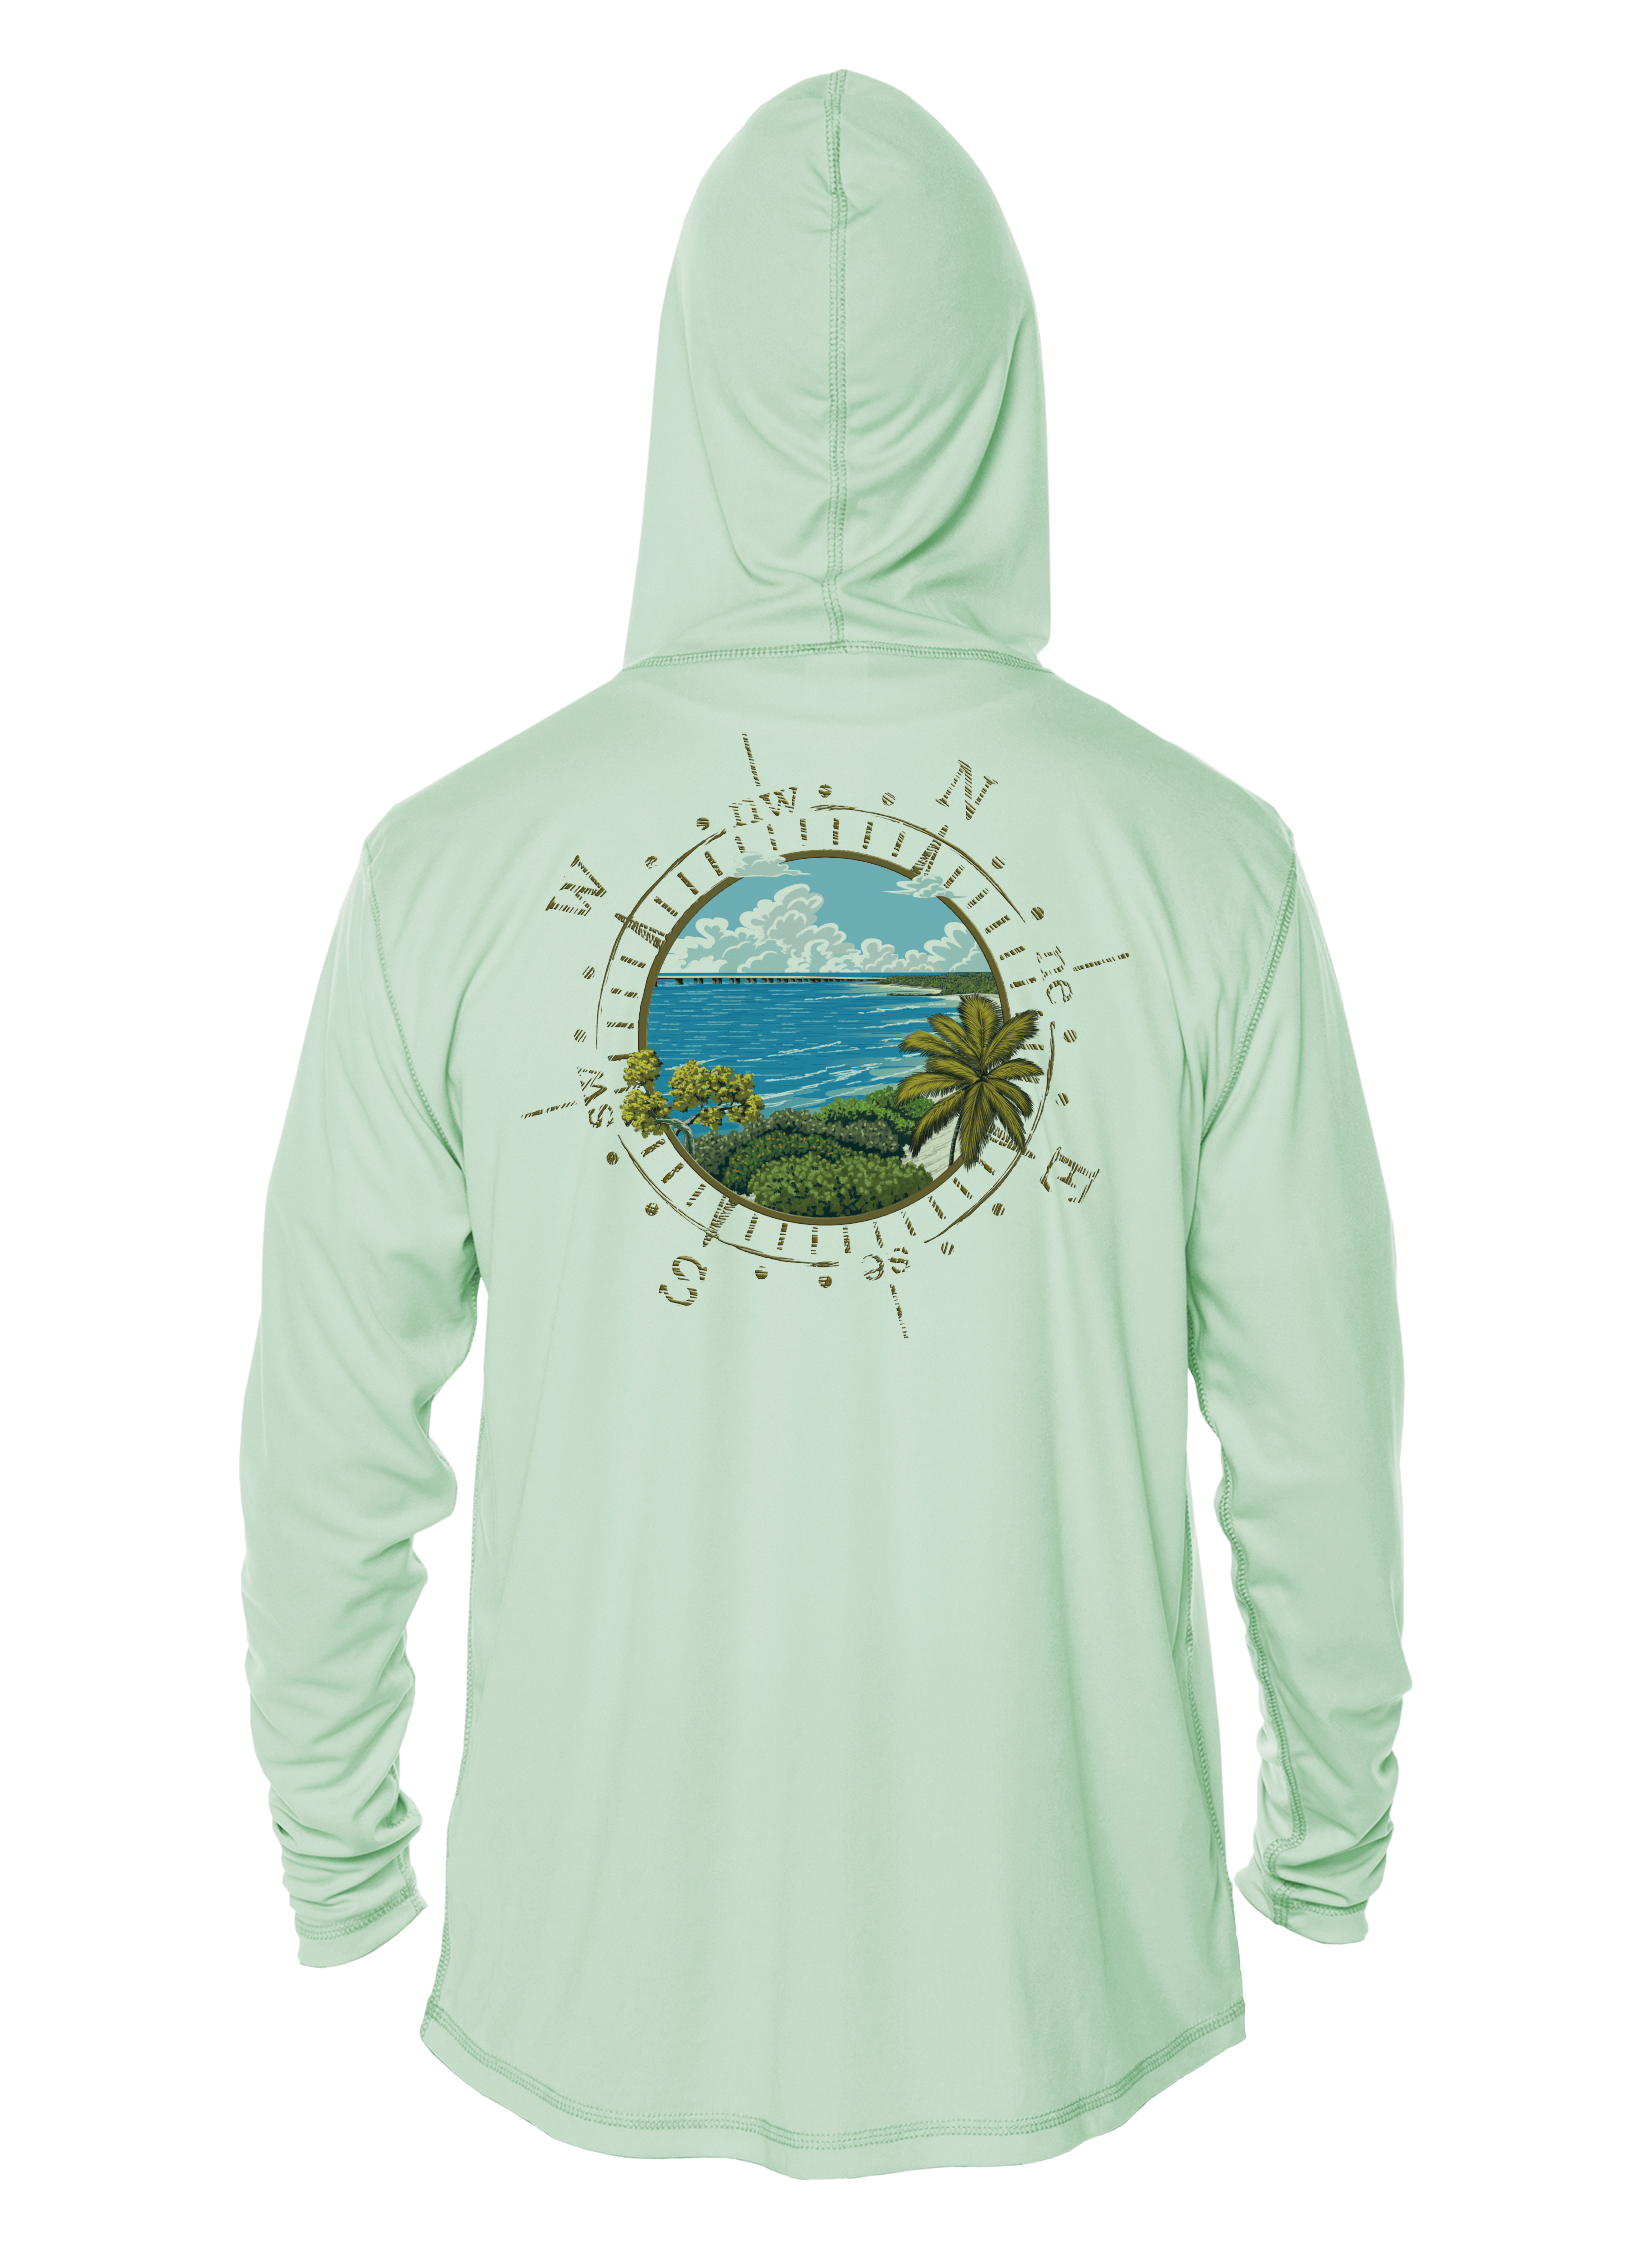 Key West Sun Shirts - Compass to Bahia Honda Key - UPF 50+ Hoodie